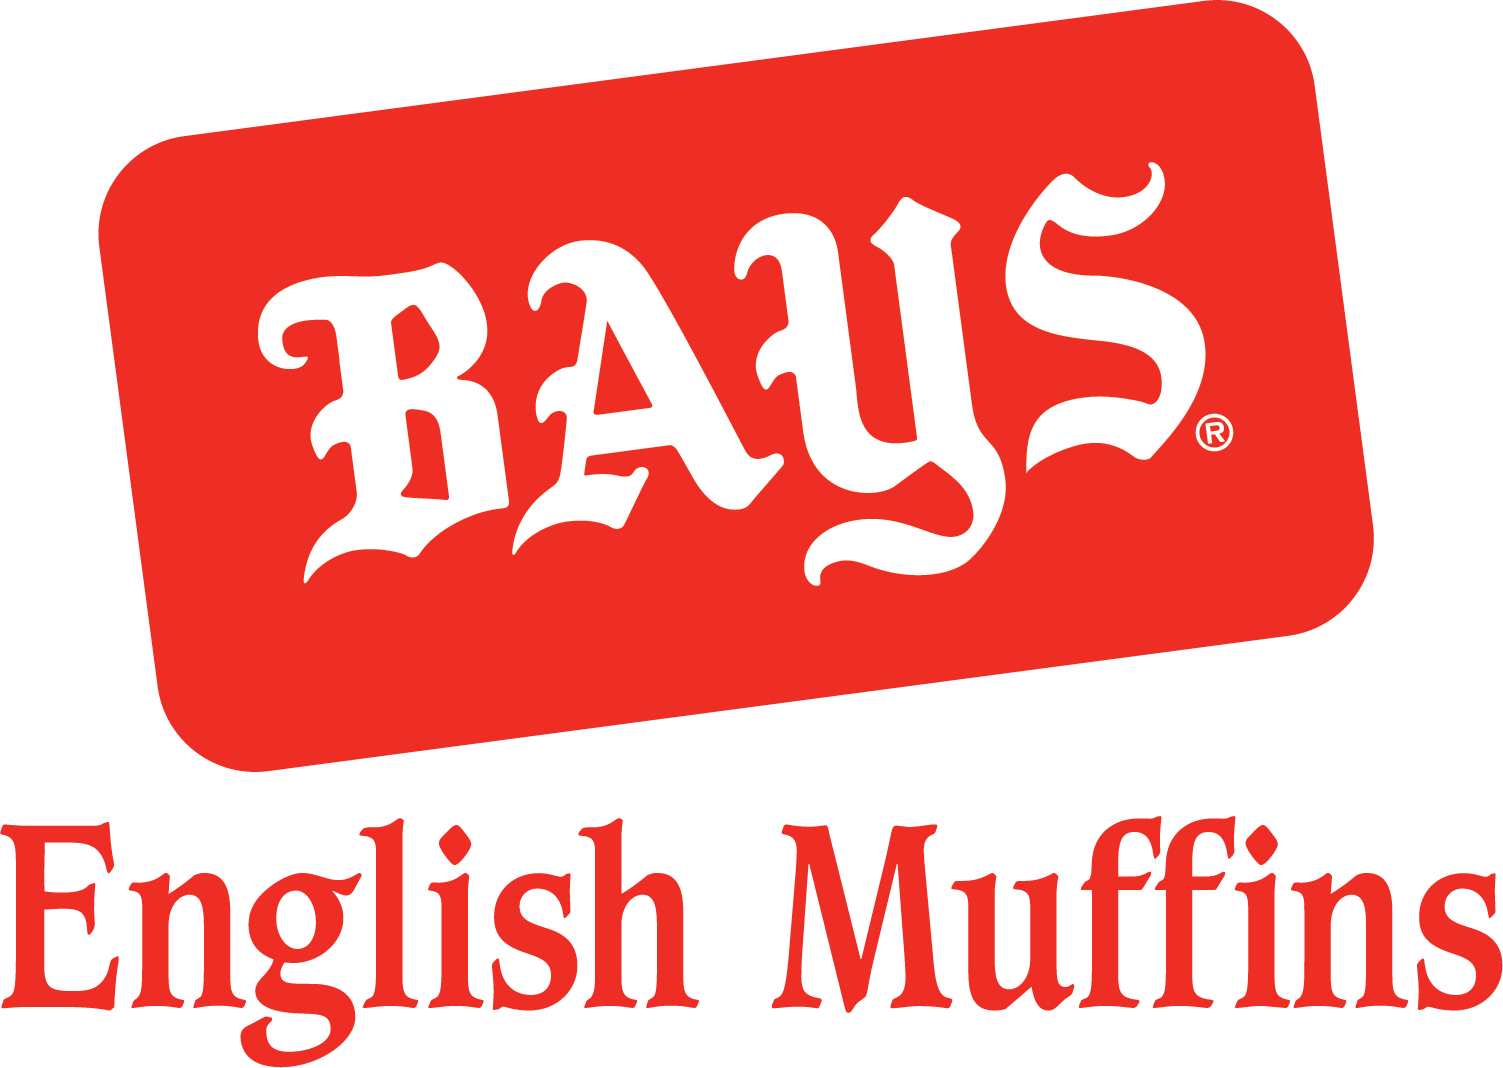 bays english muffins logo